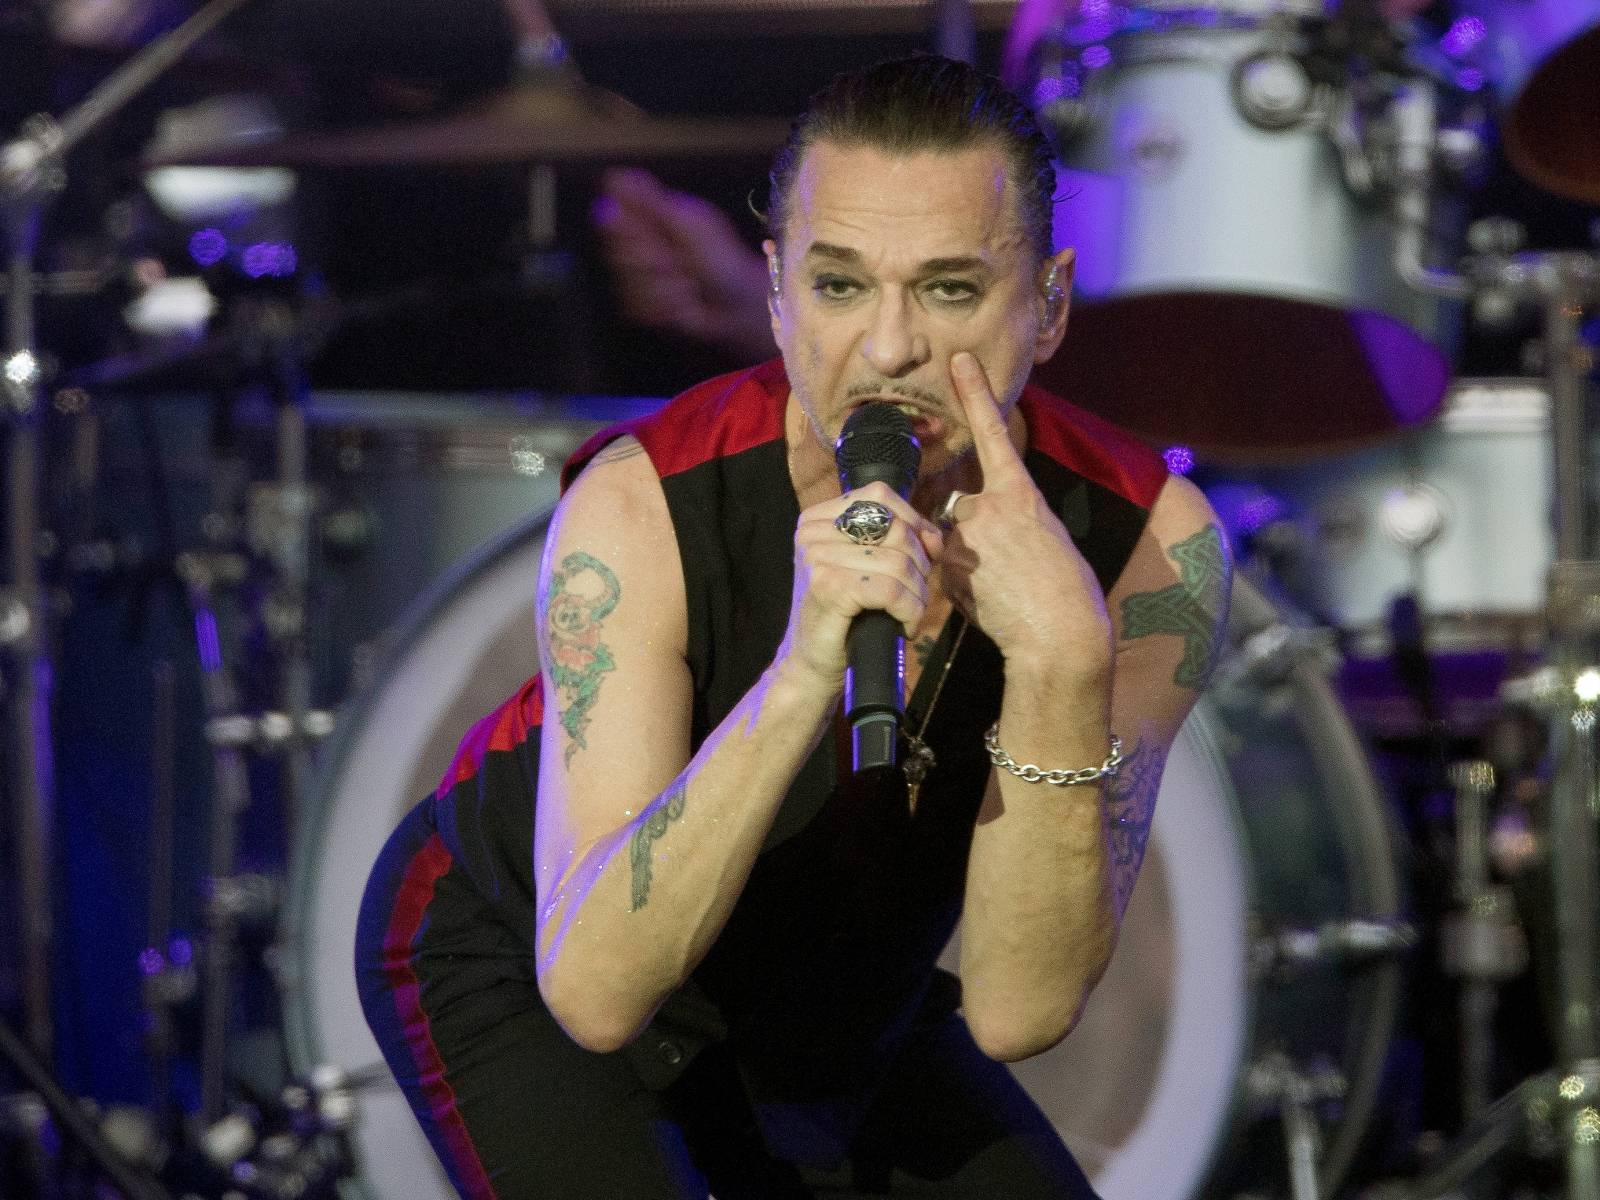 Grand finale of Depeche Mode's "Global Spirit" world tour